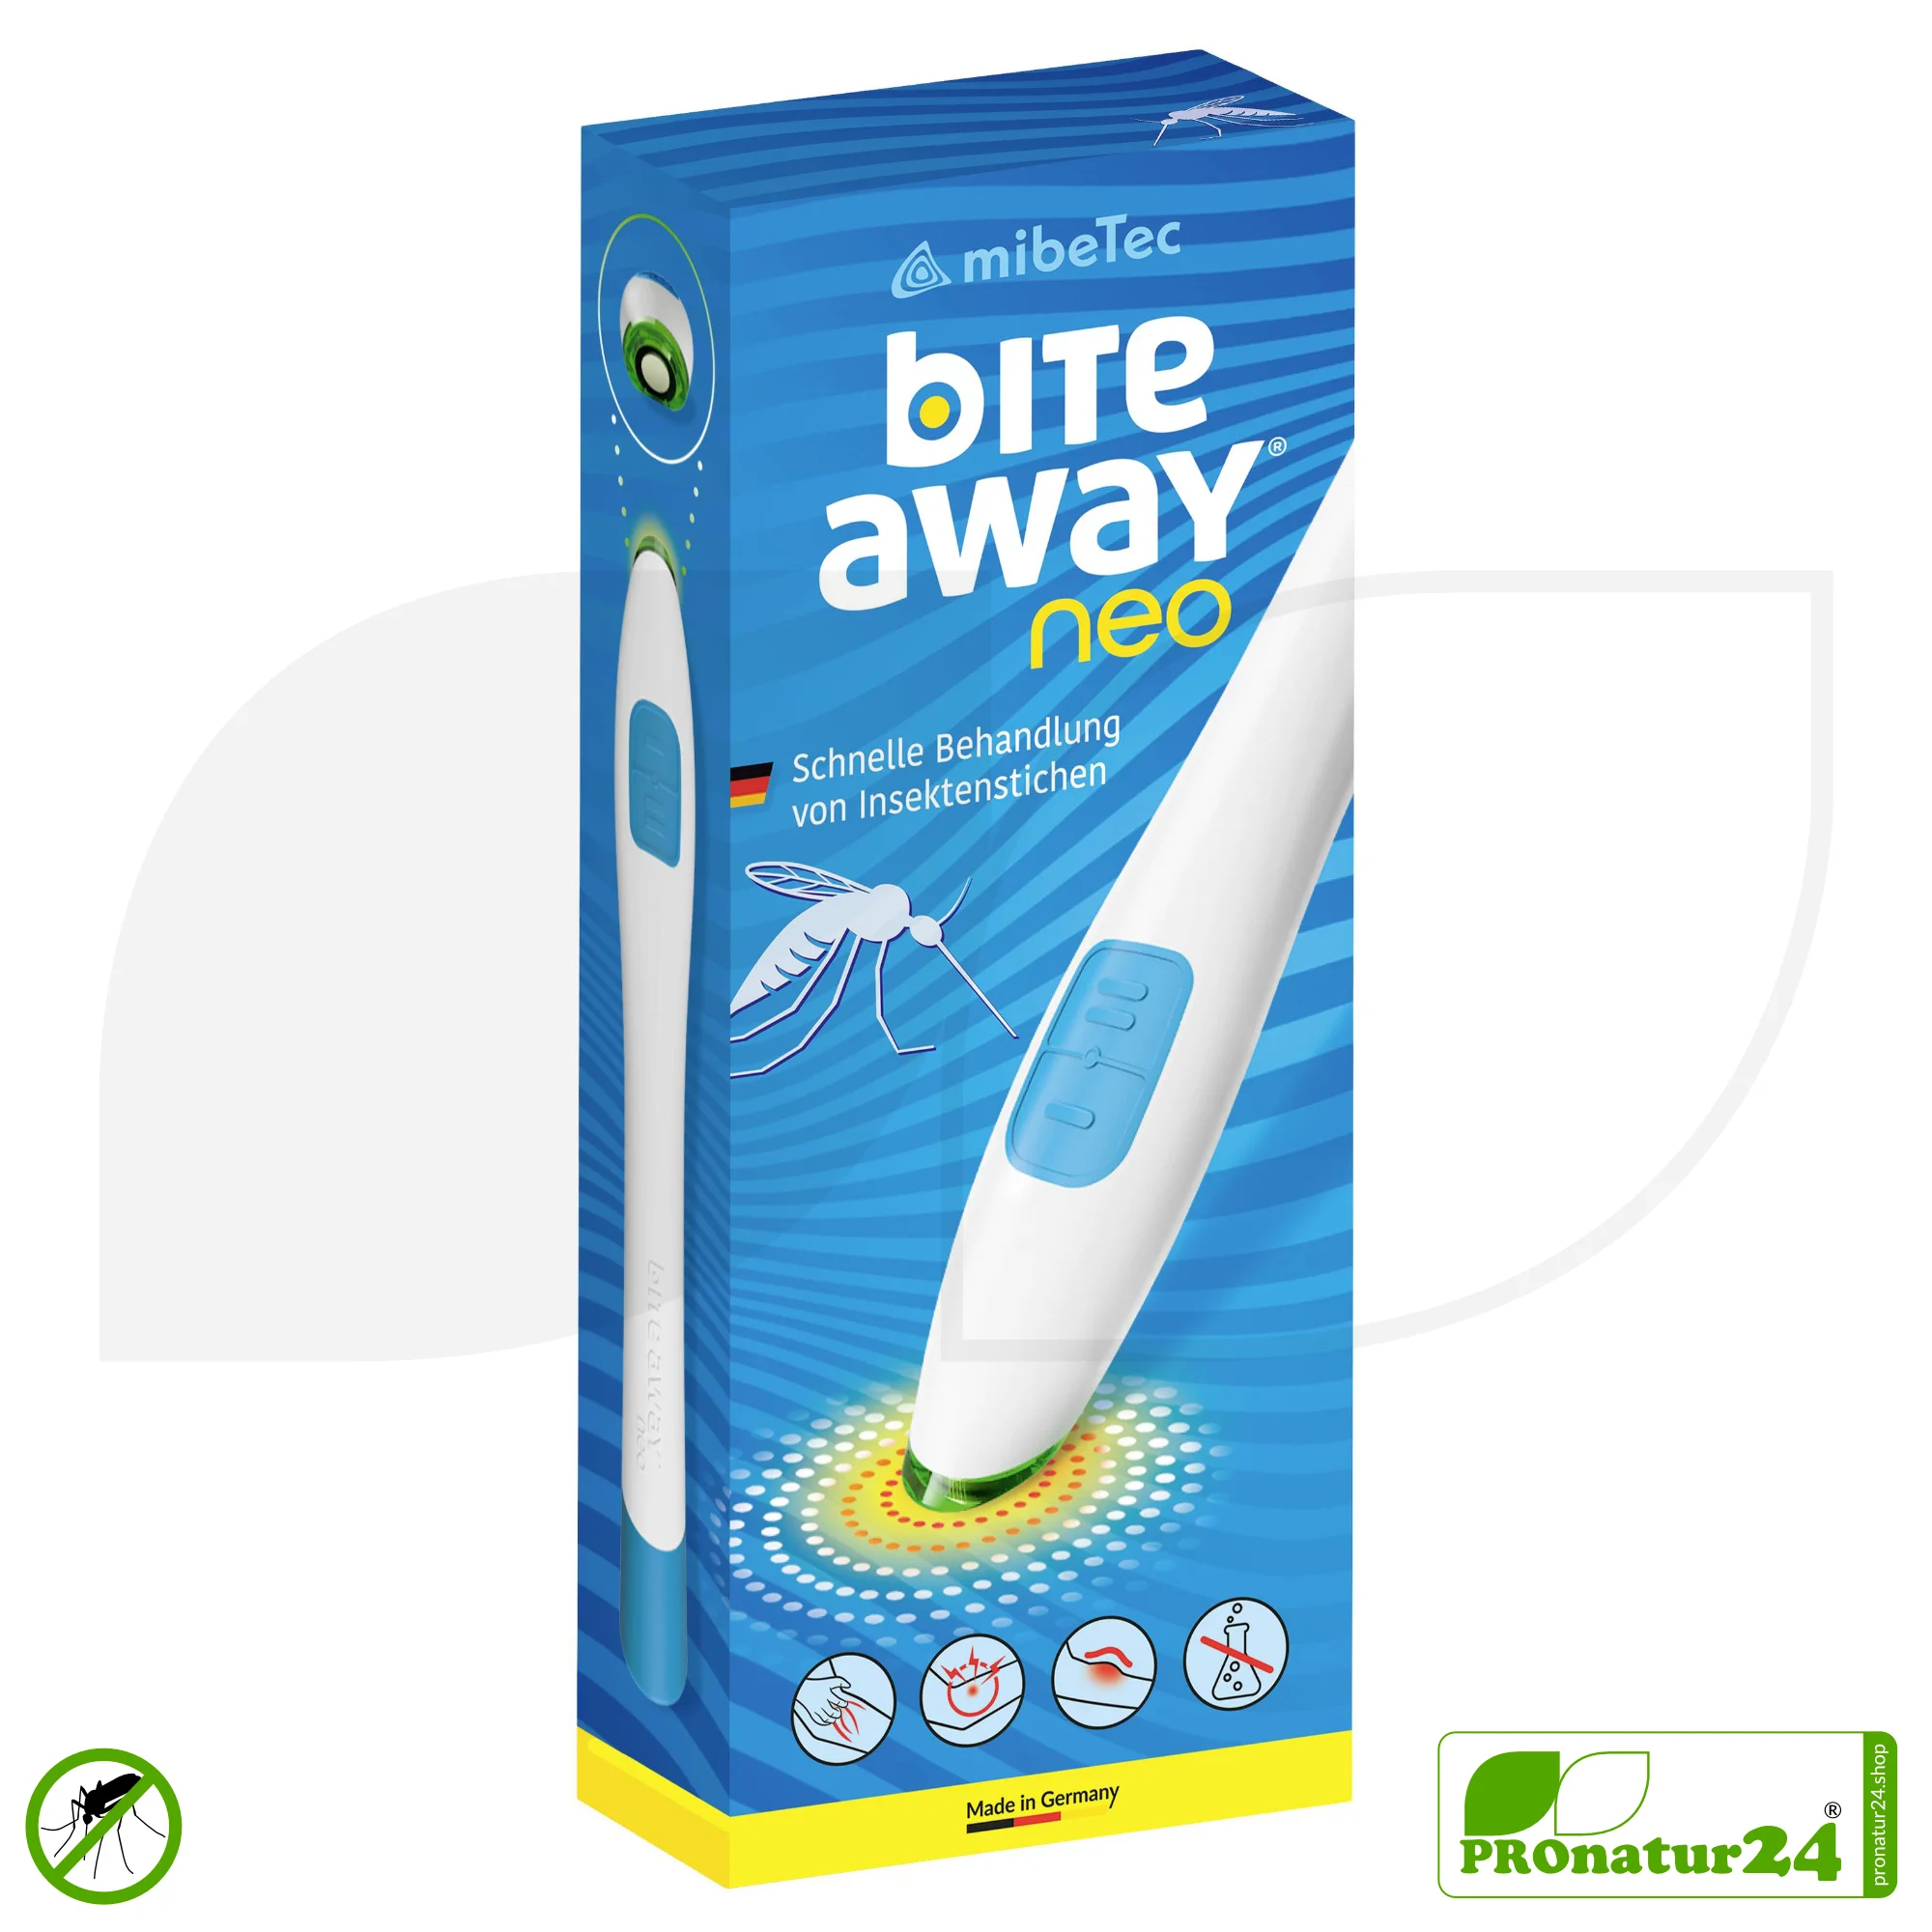 ▷ bite away® neo  Original bite healer against insect bites